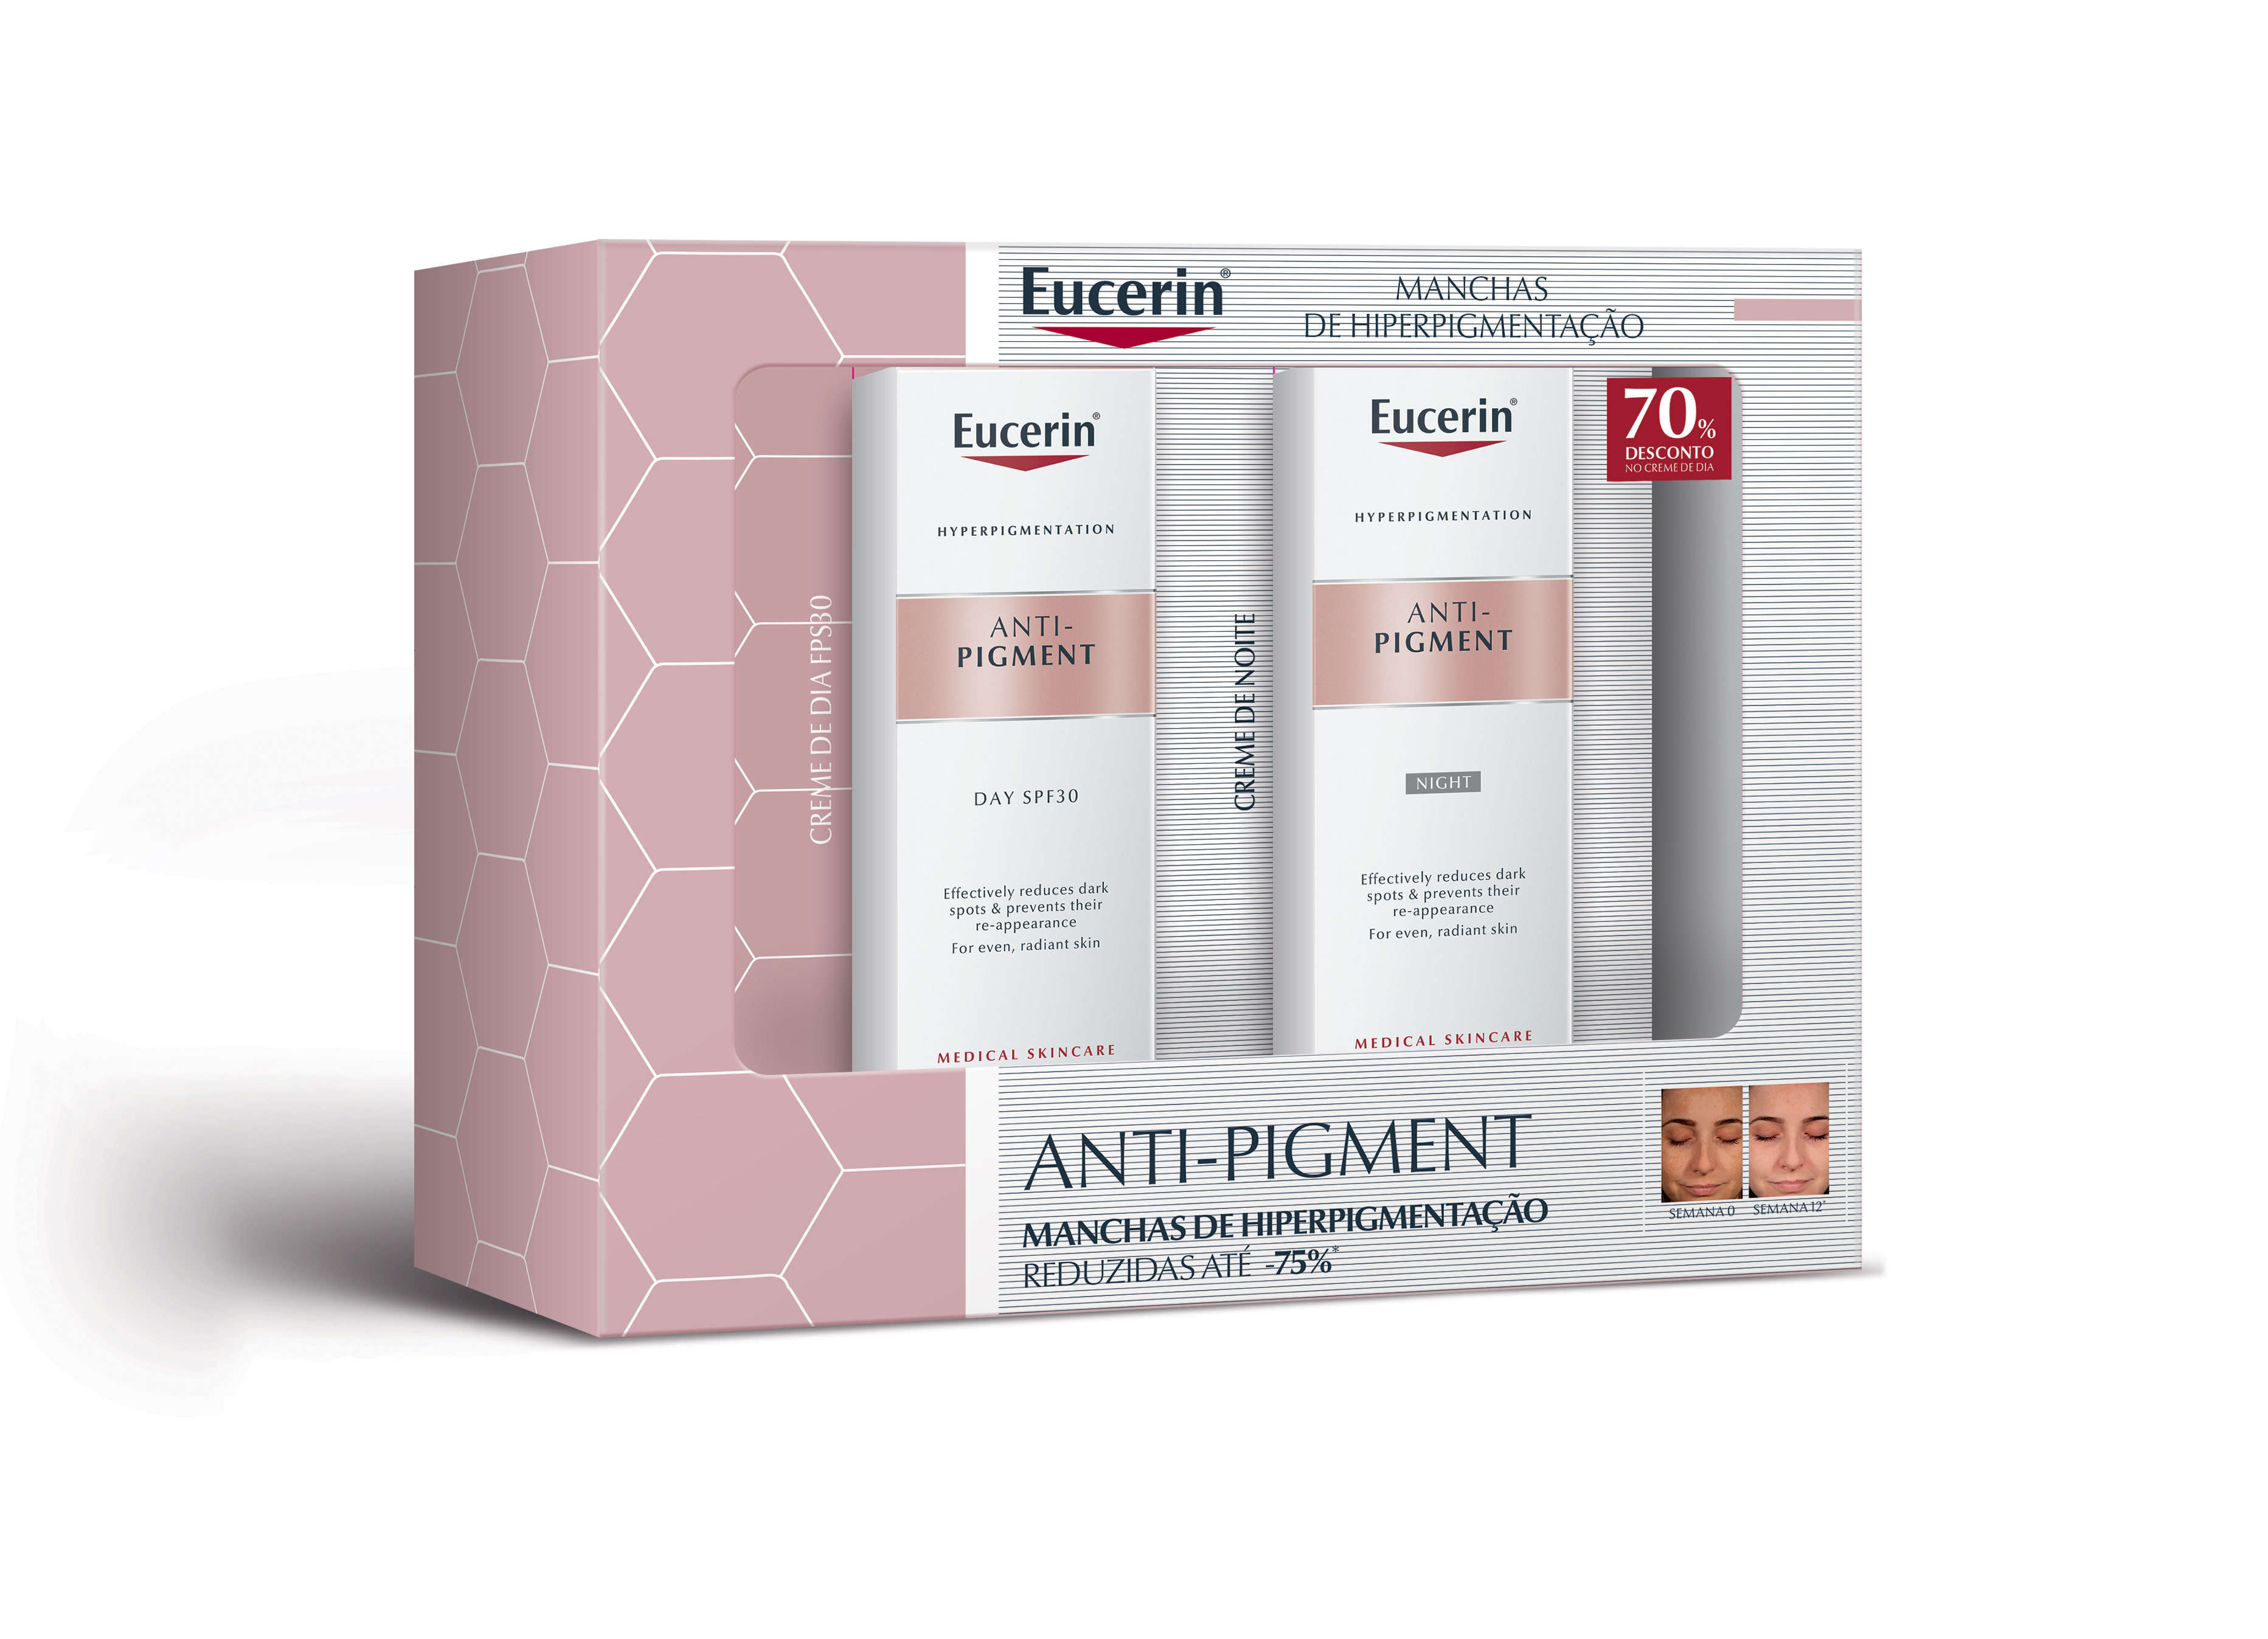 Pack Eucerin Anti-Pigment cuidado antimanchas, € 36.45